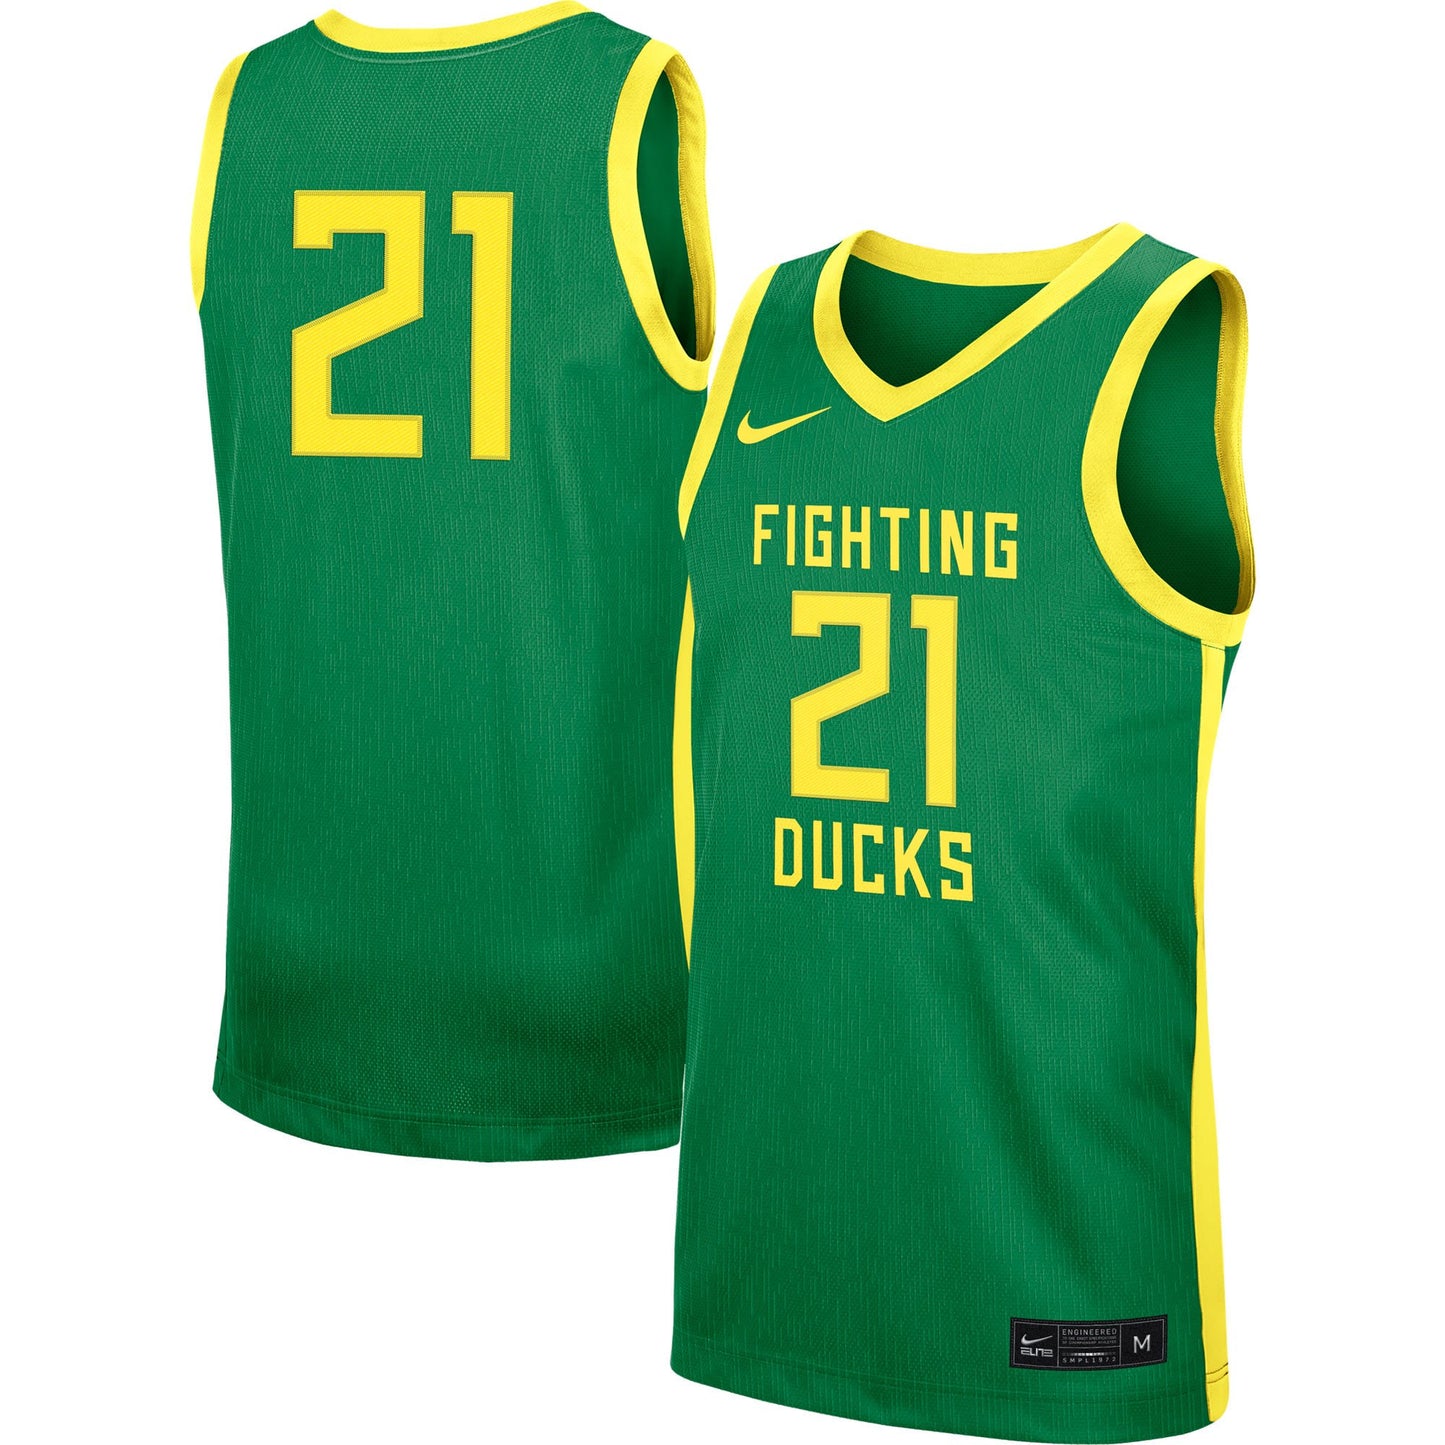 Men's Oregon Ducks Nike Replica #21 Basketball Jersey – Green